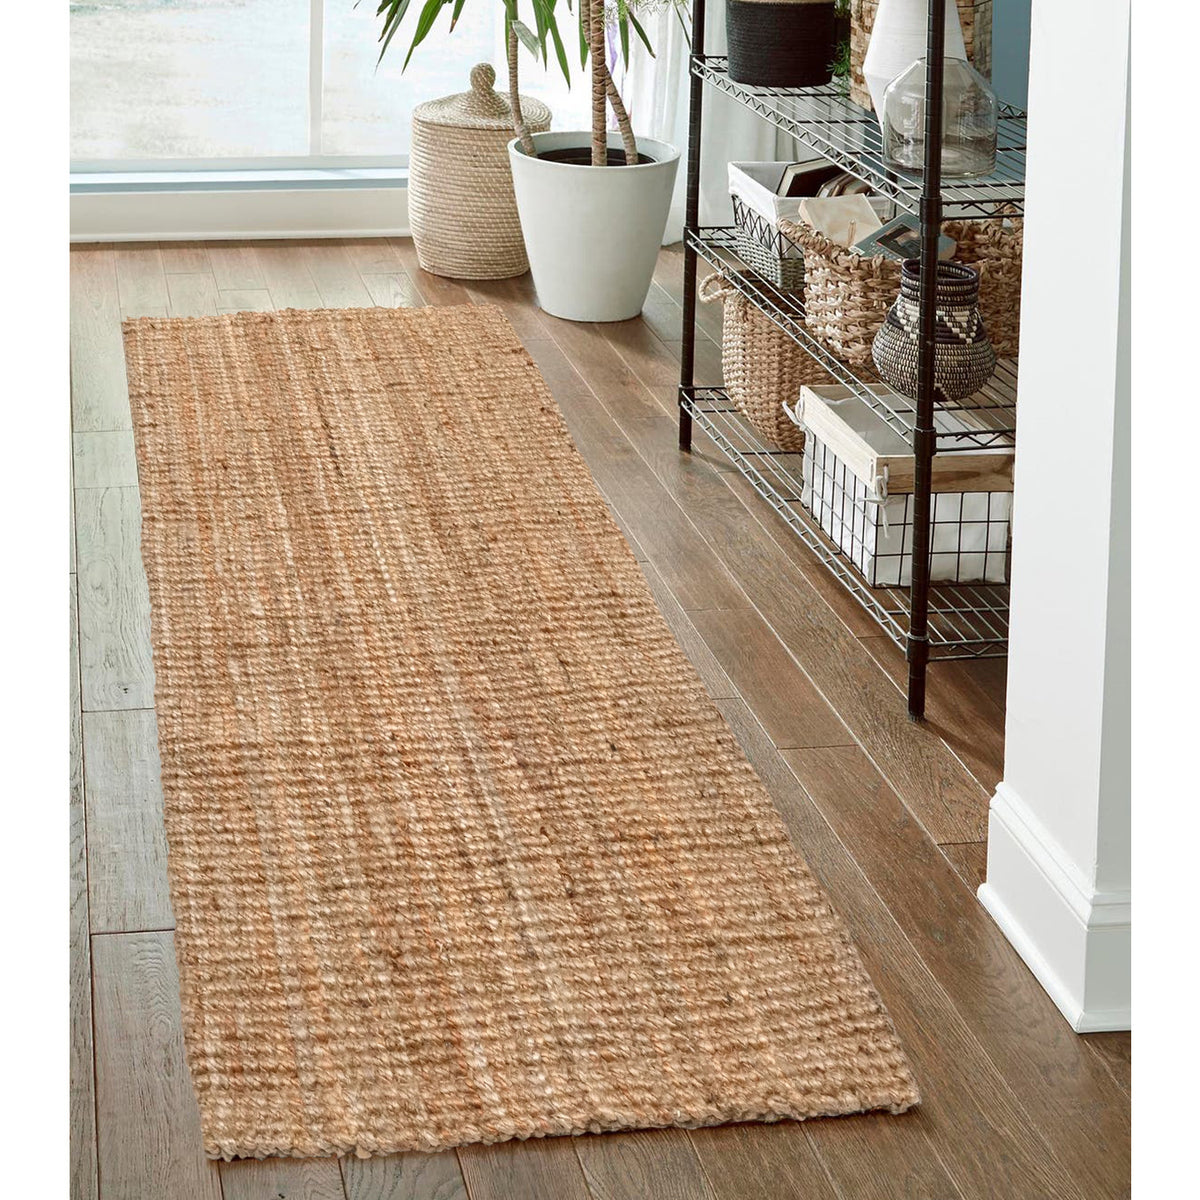 OnlyMat Natural HandSpun Jute Runner Rug Eco-Friendly Handwoven Carpet for Bedside Living Room Decor